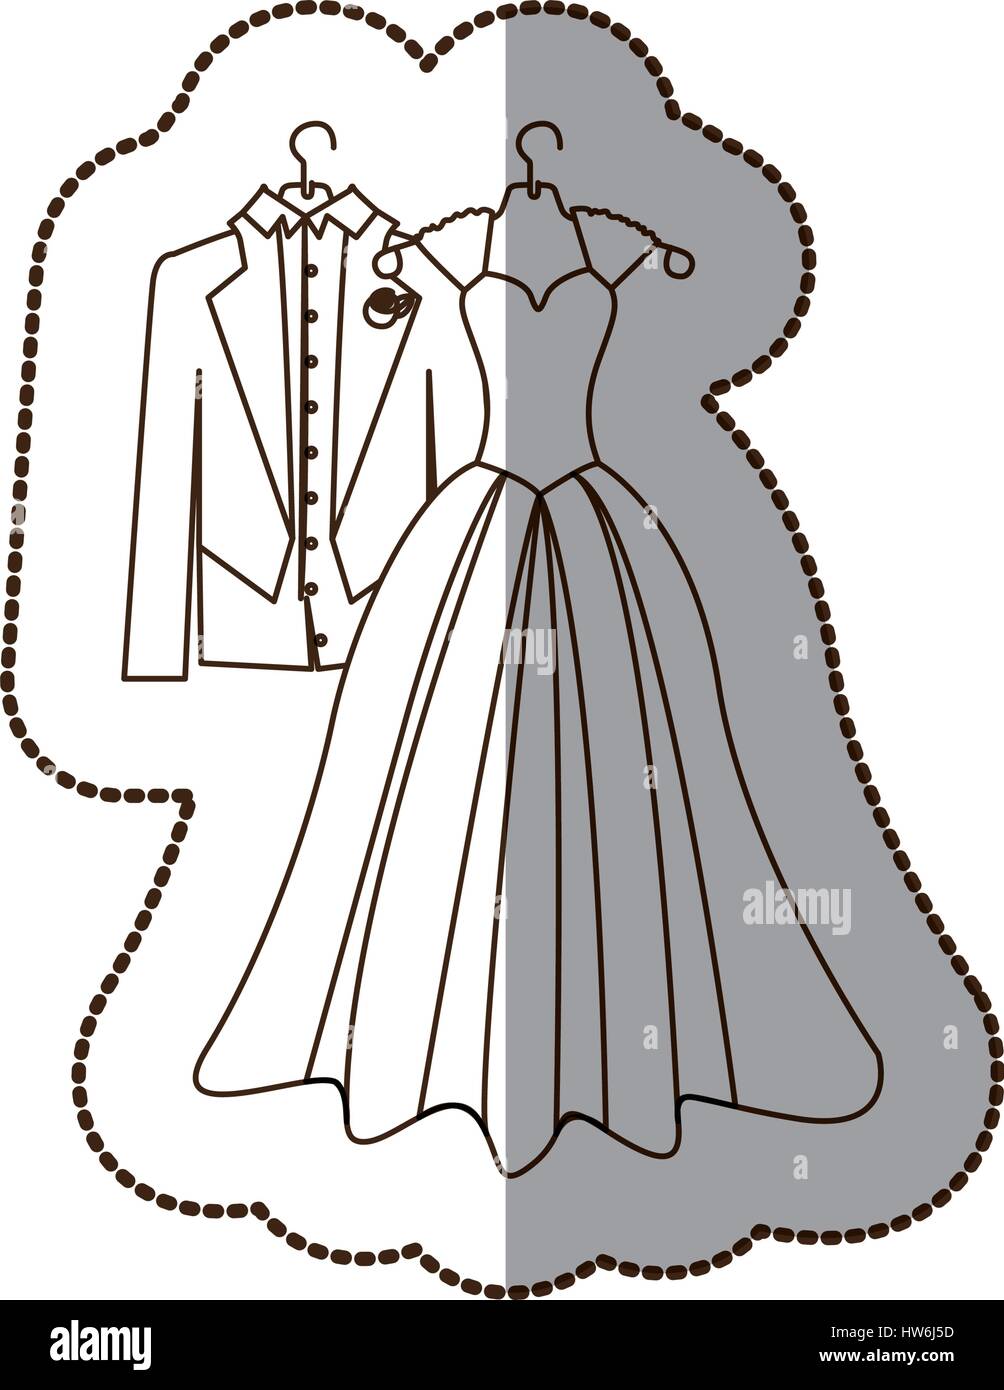 elegante Jacke und Kleid verheiratet-Symbol Stock-Vektorgrafik - Alamy